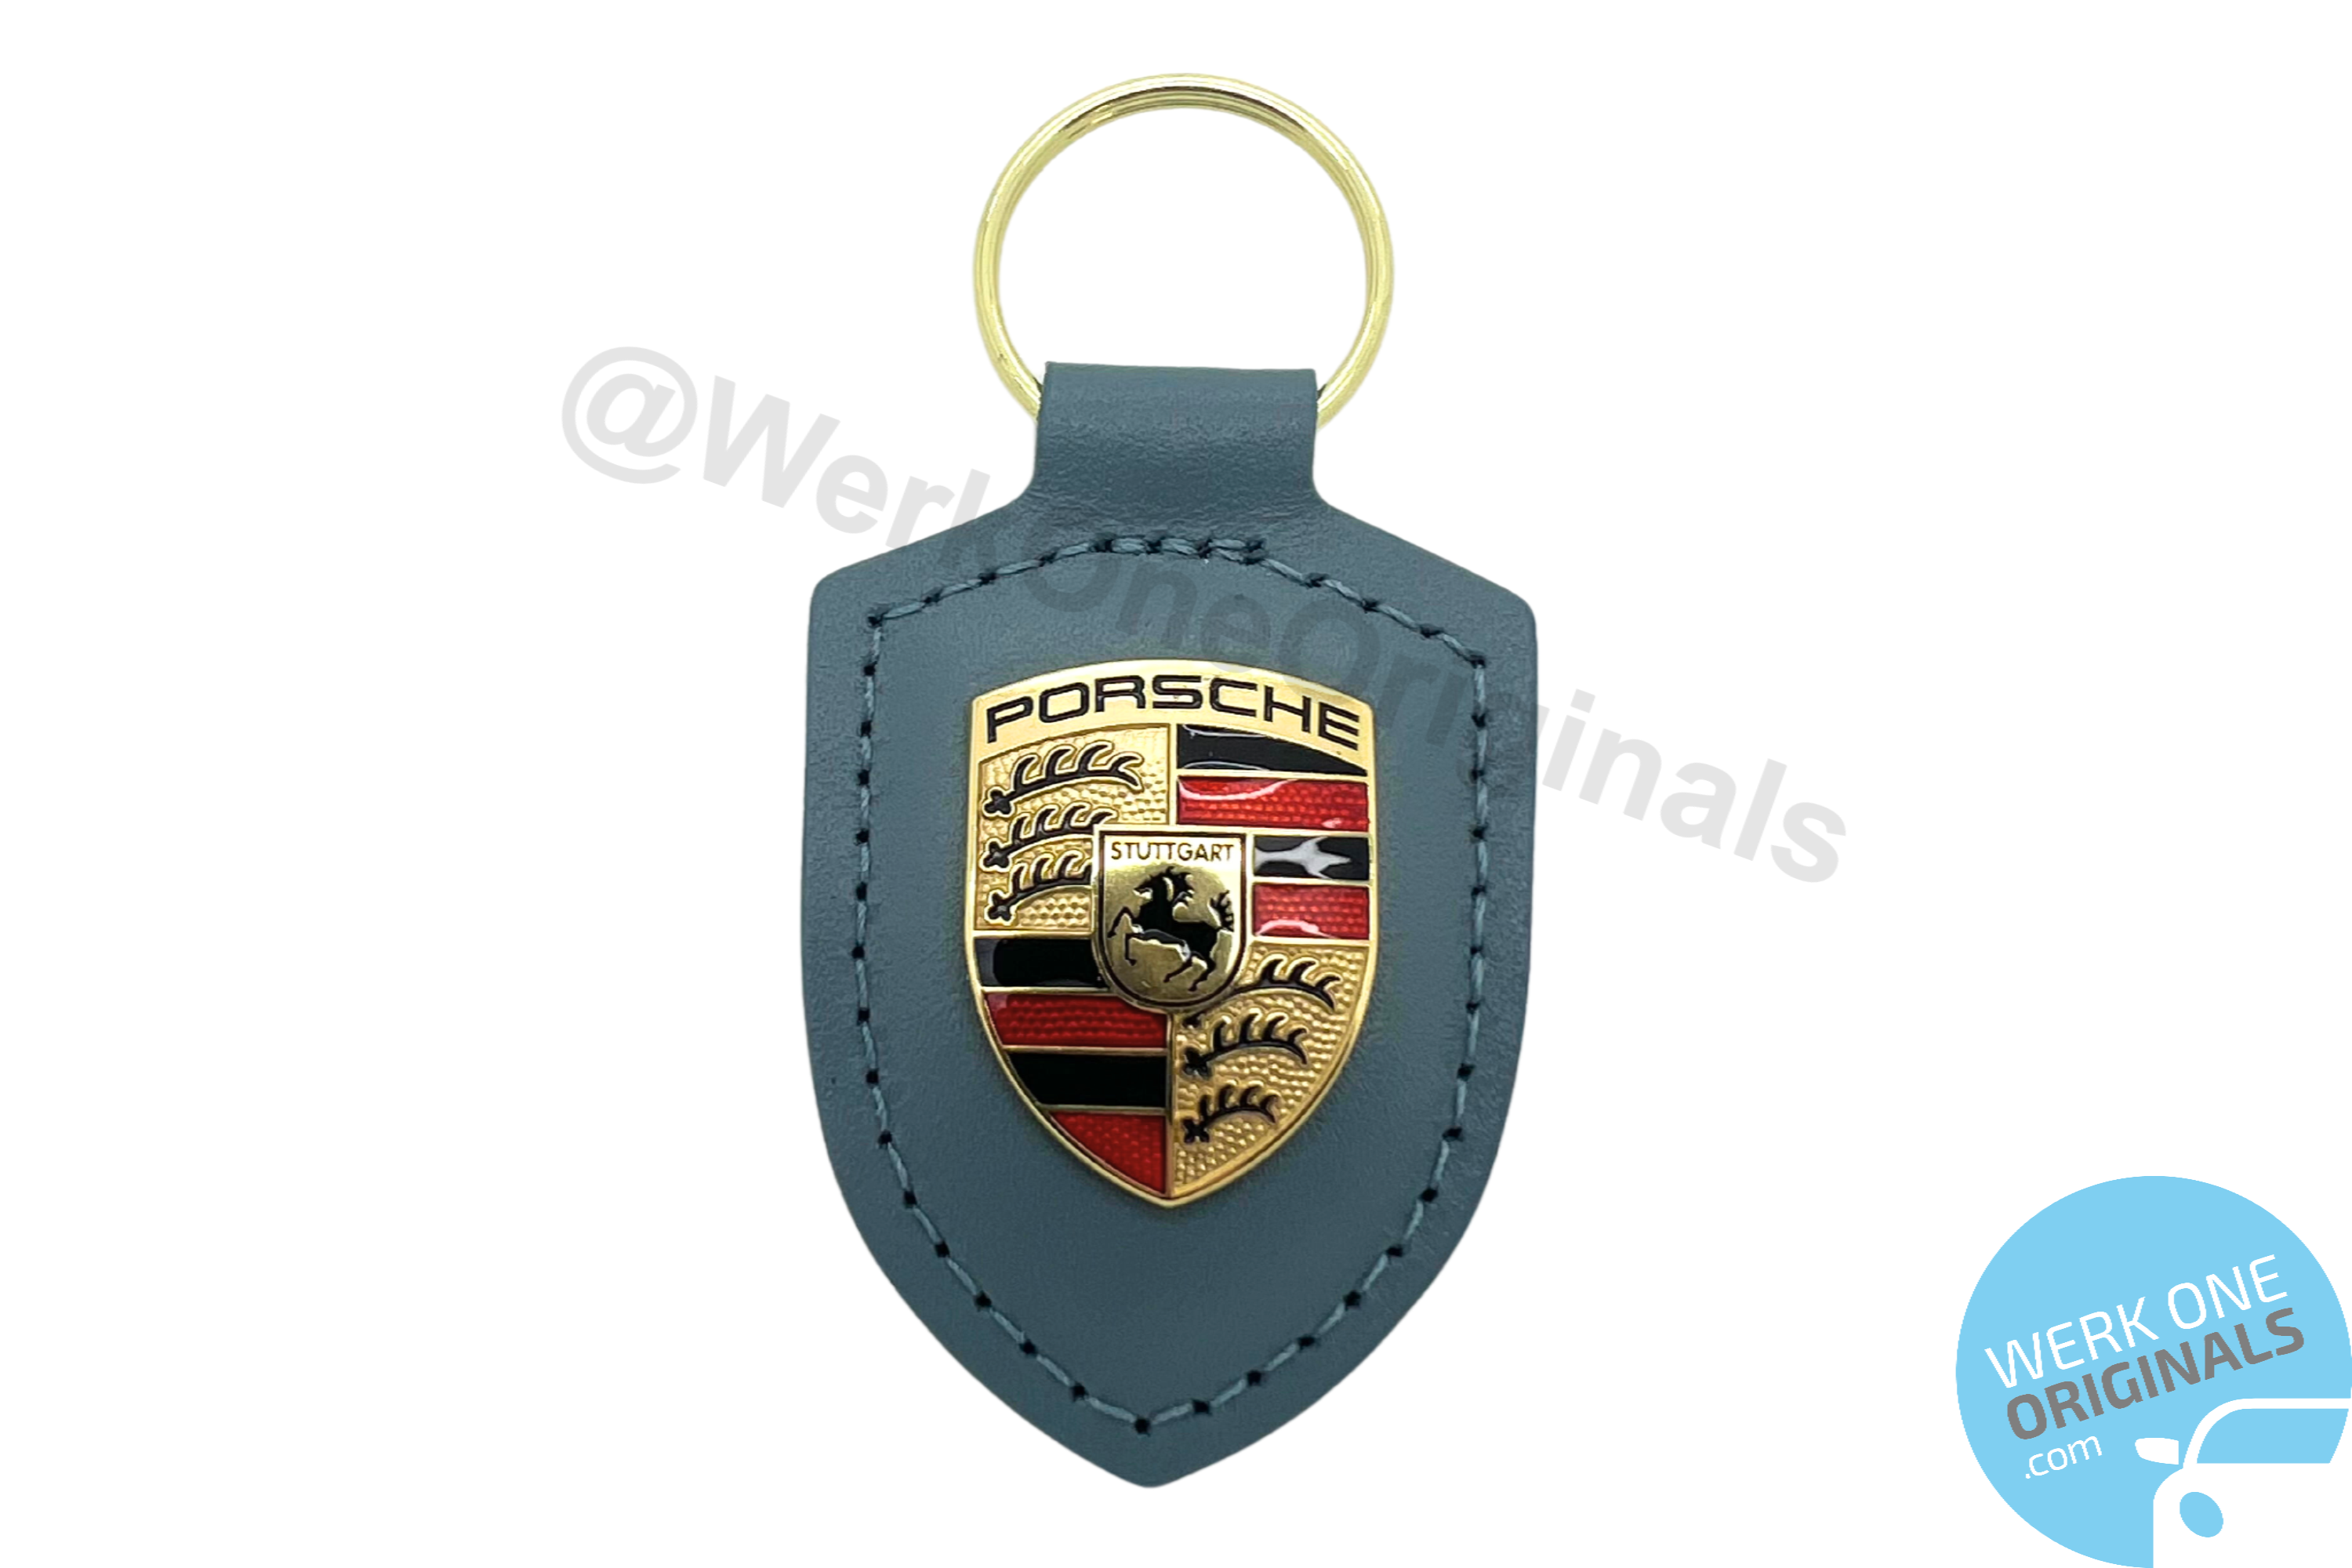 Porsche Official Crest Leather Key Fob in Light Blue